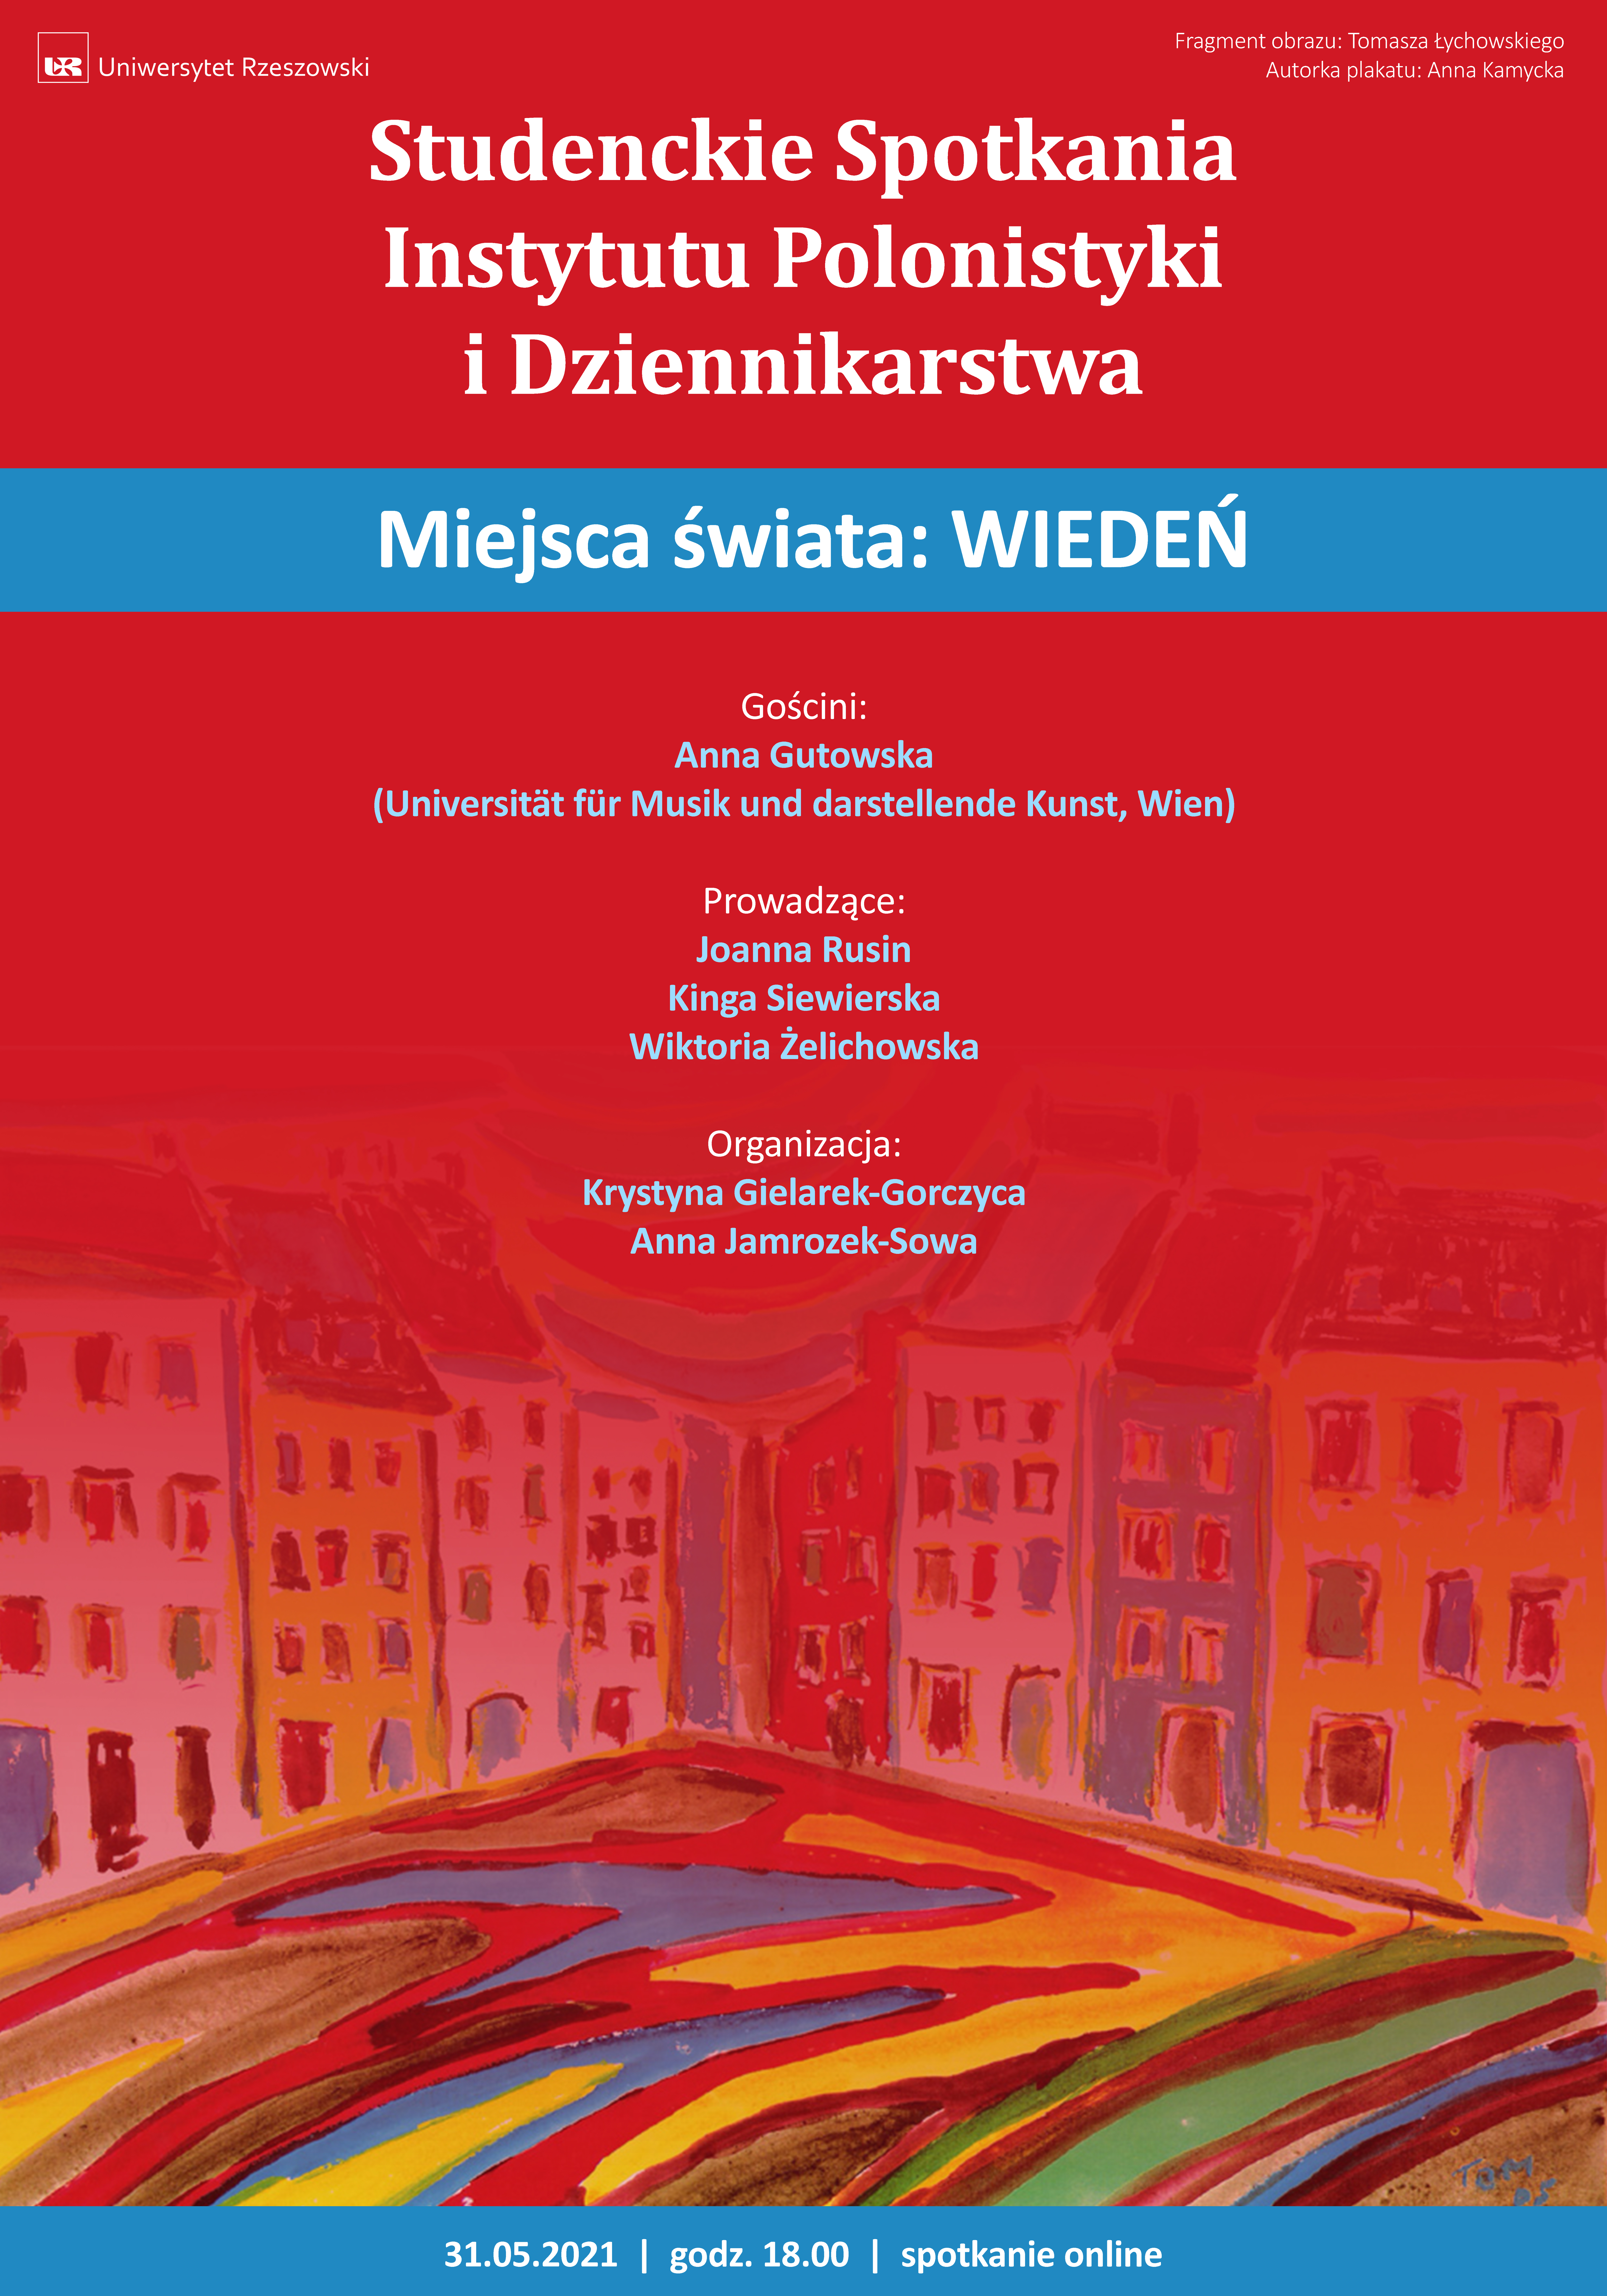 Plakat Studenckie Spotkania IPiD, Wiedeń 31.05.21.jpg [11.34 MB]